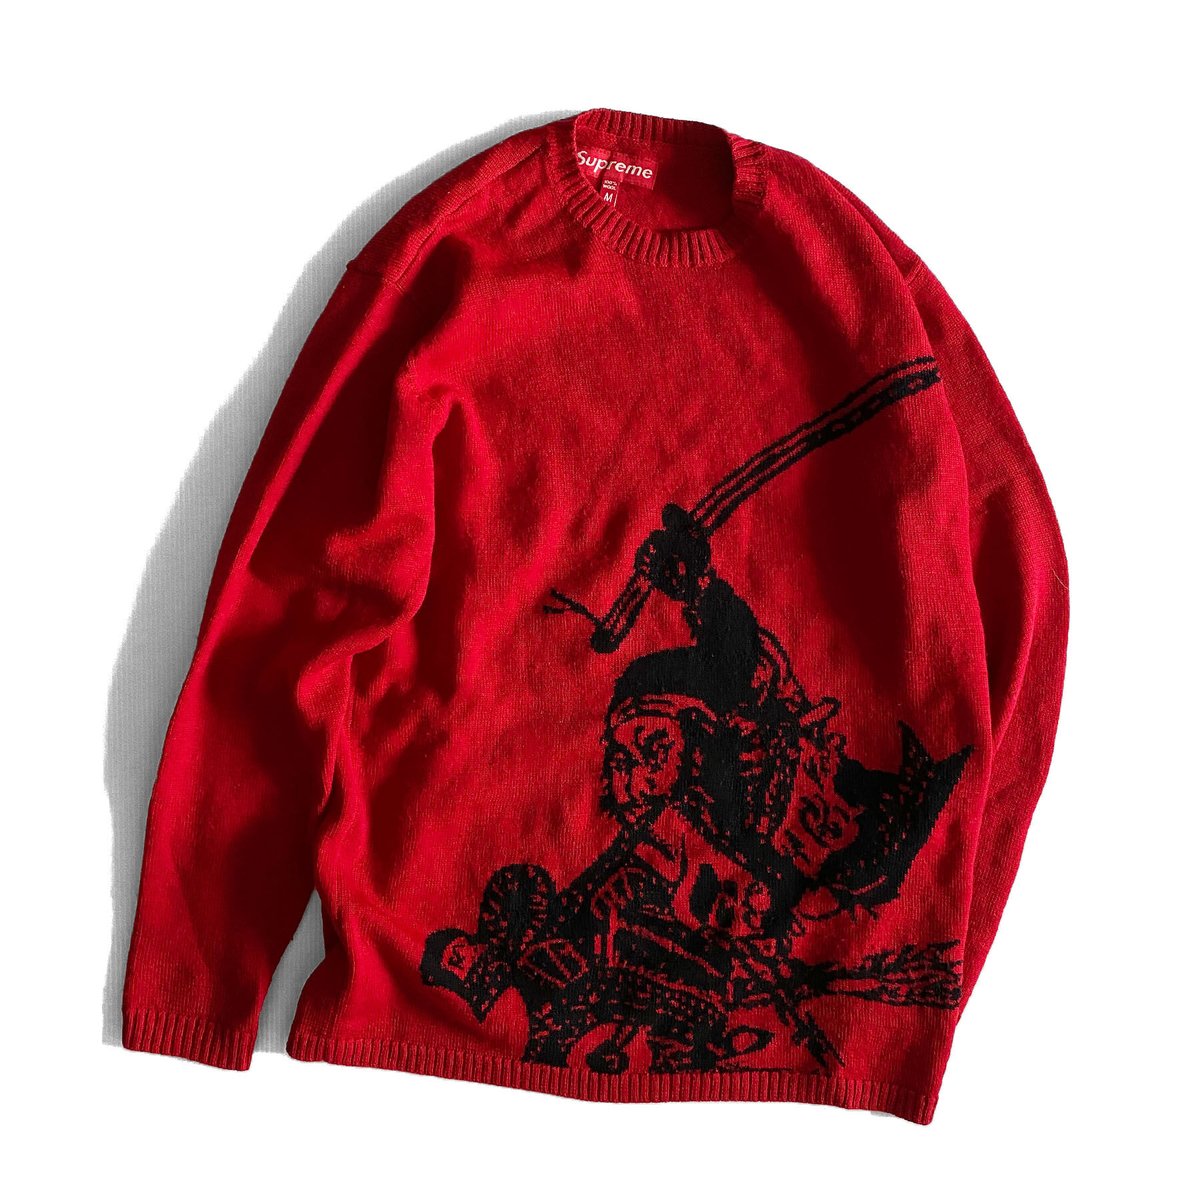 SAMURAI Sweater by Supreme | instantbootleg store